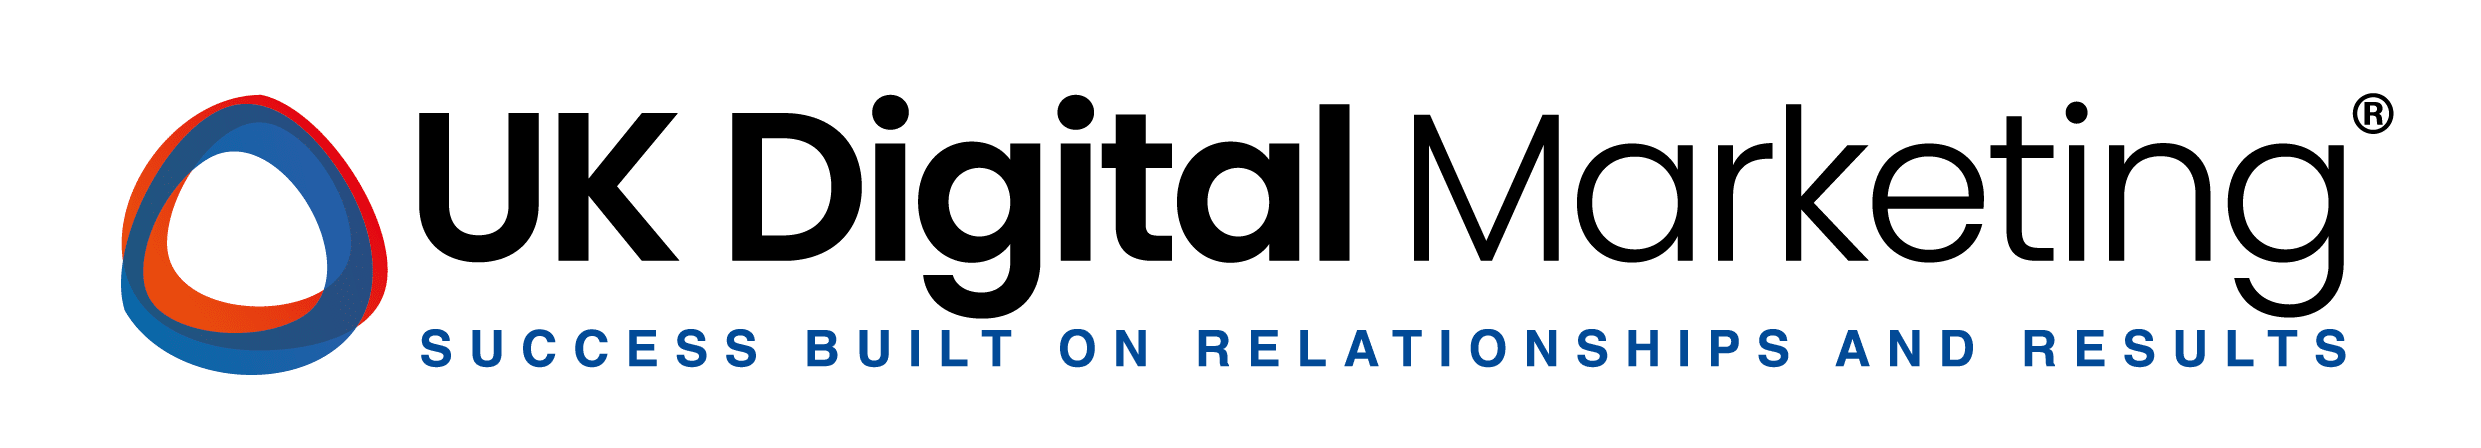 UK Digital Marketing Logo